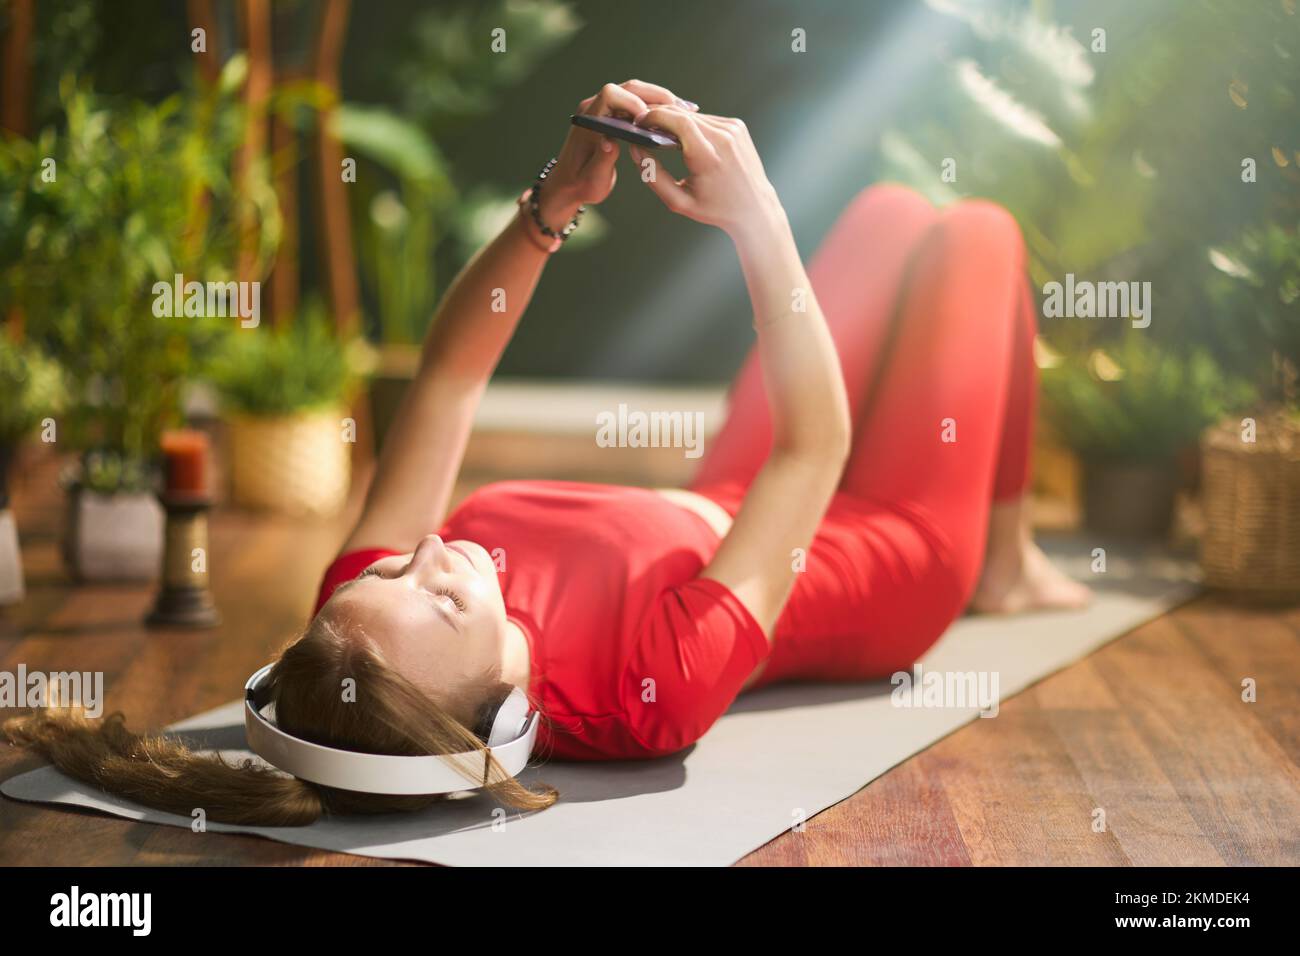 mujer joven con ropa de fitness roja con colchoneta de yoga con smartphone y escuchar música con auriculares en un hogar moderno verde. Foto de stock